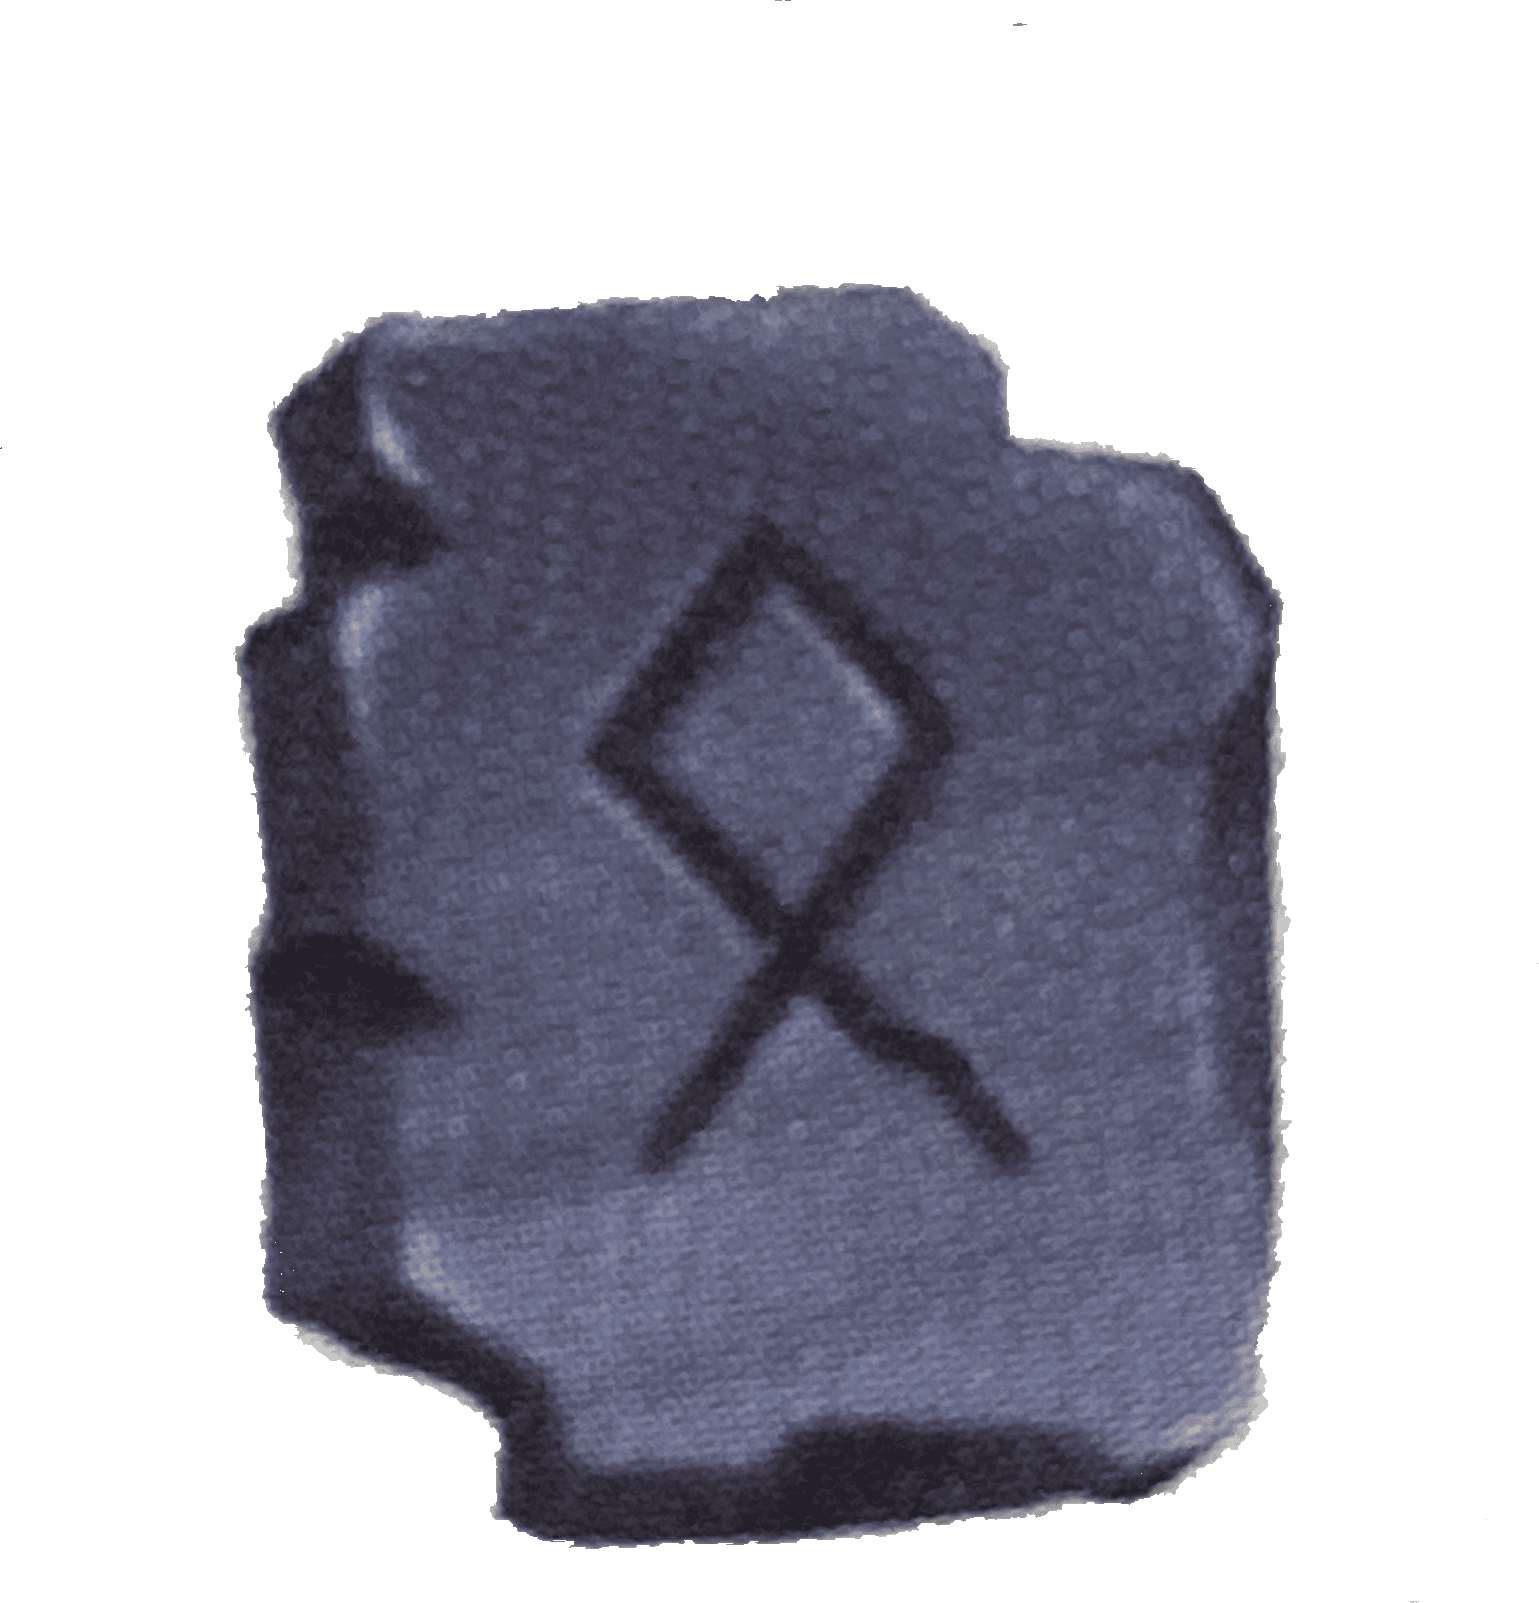 Northgard Icon Rune on a stone